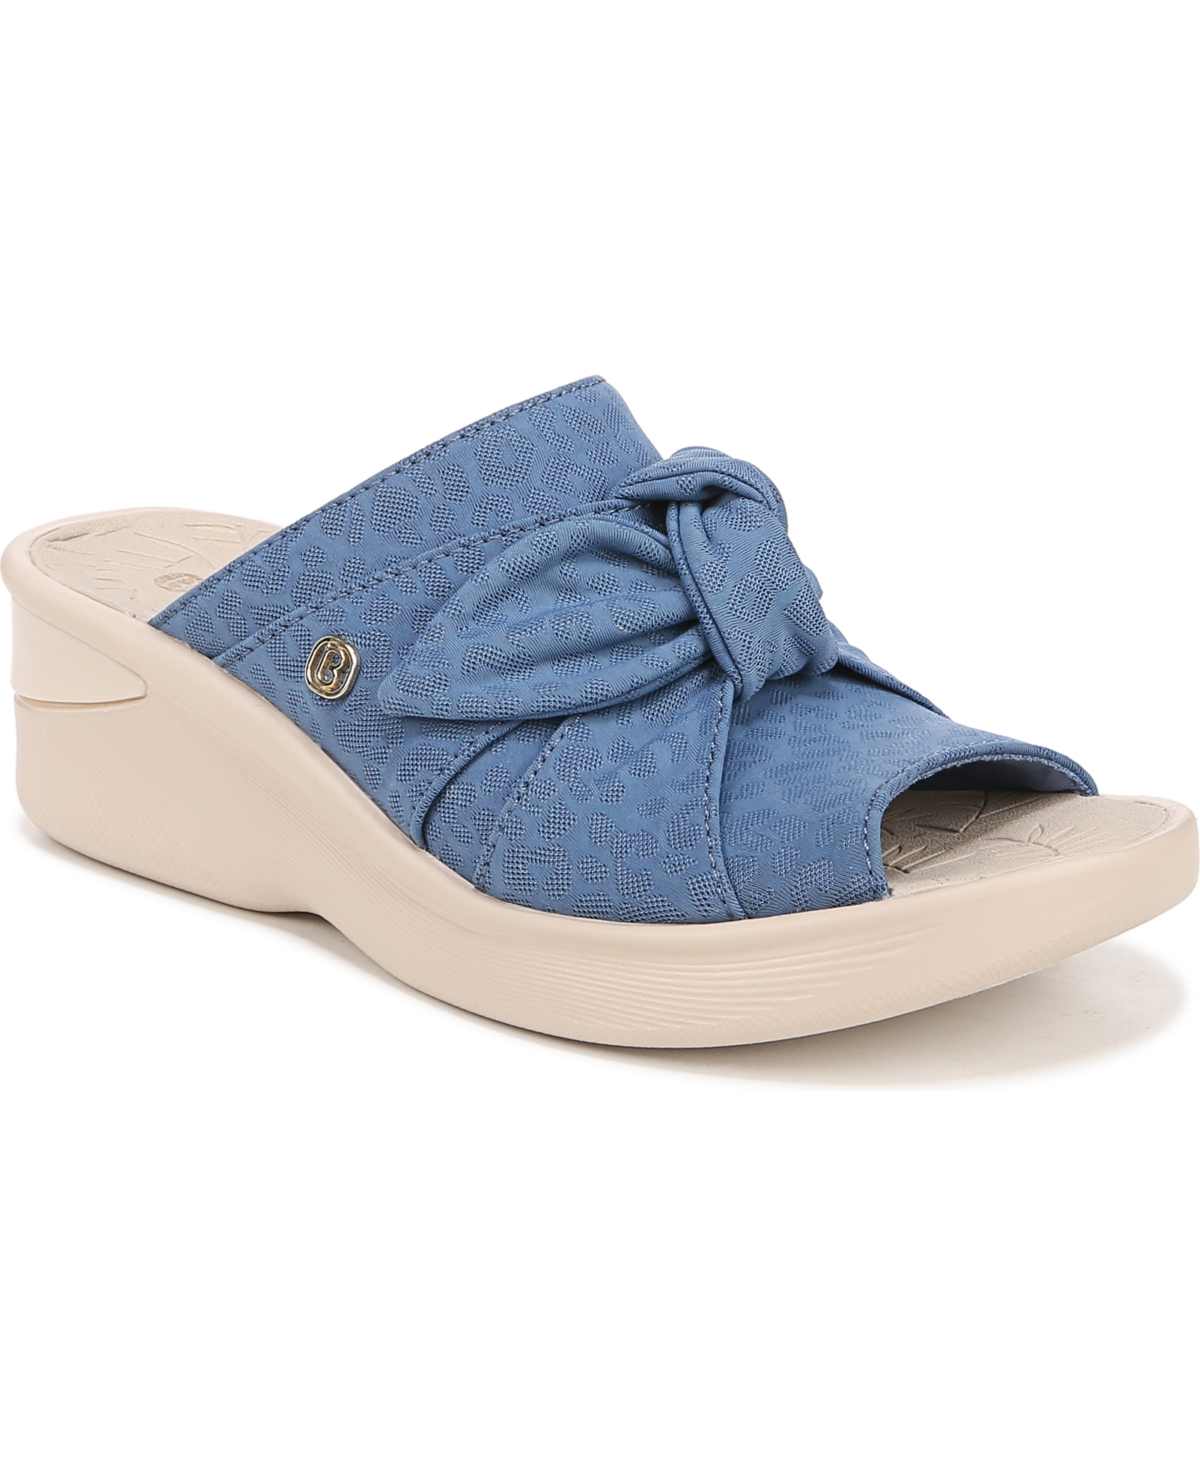 Premium Smile Washable Slide Wedge Sandals - Blue Fabric